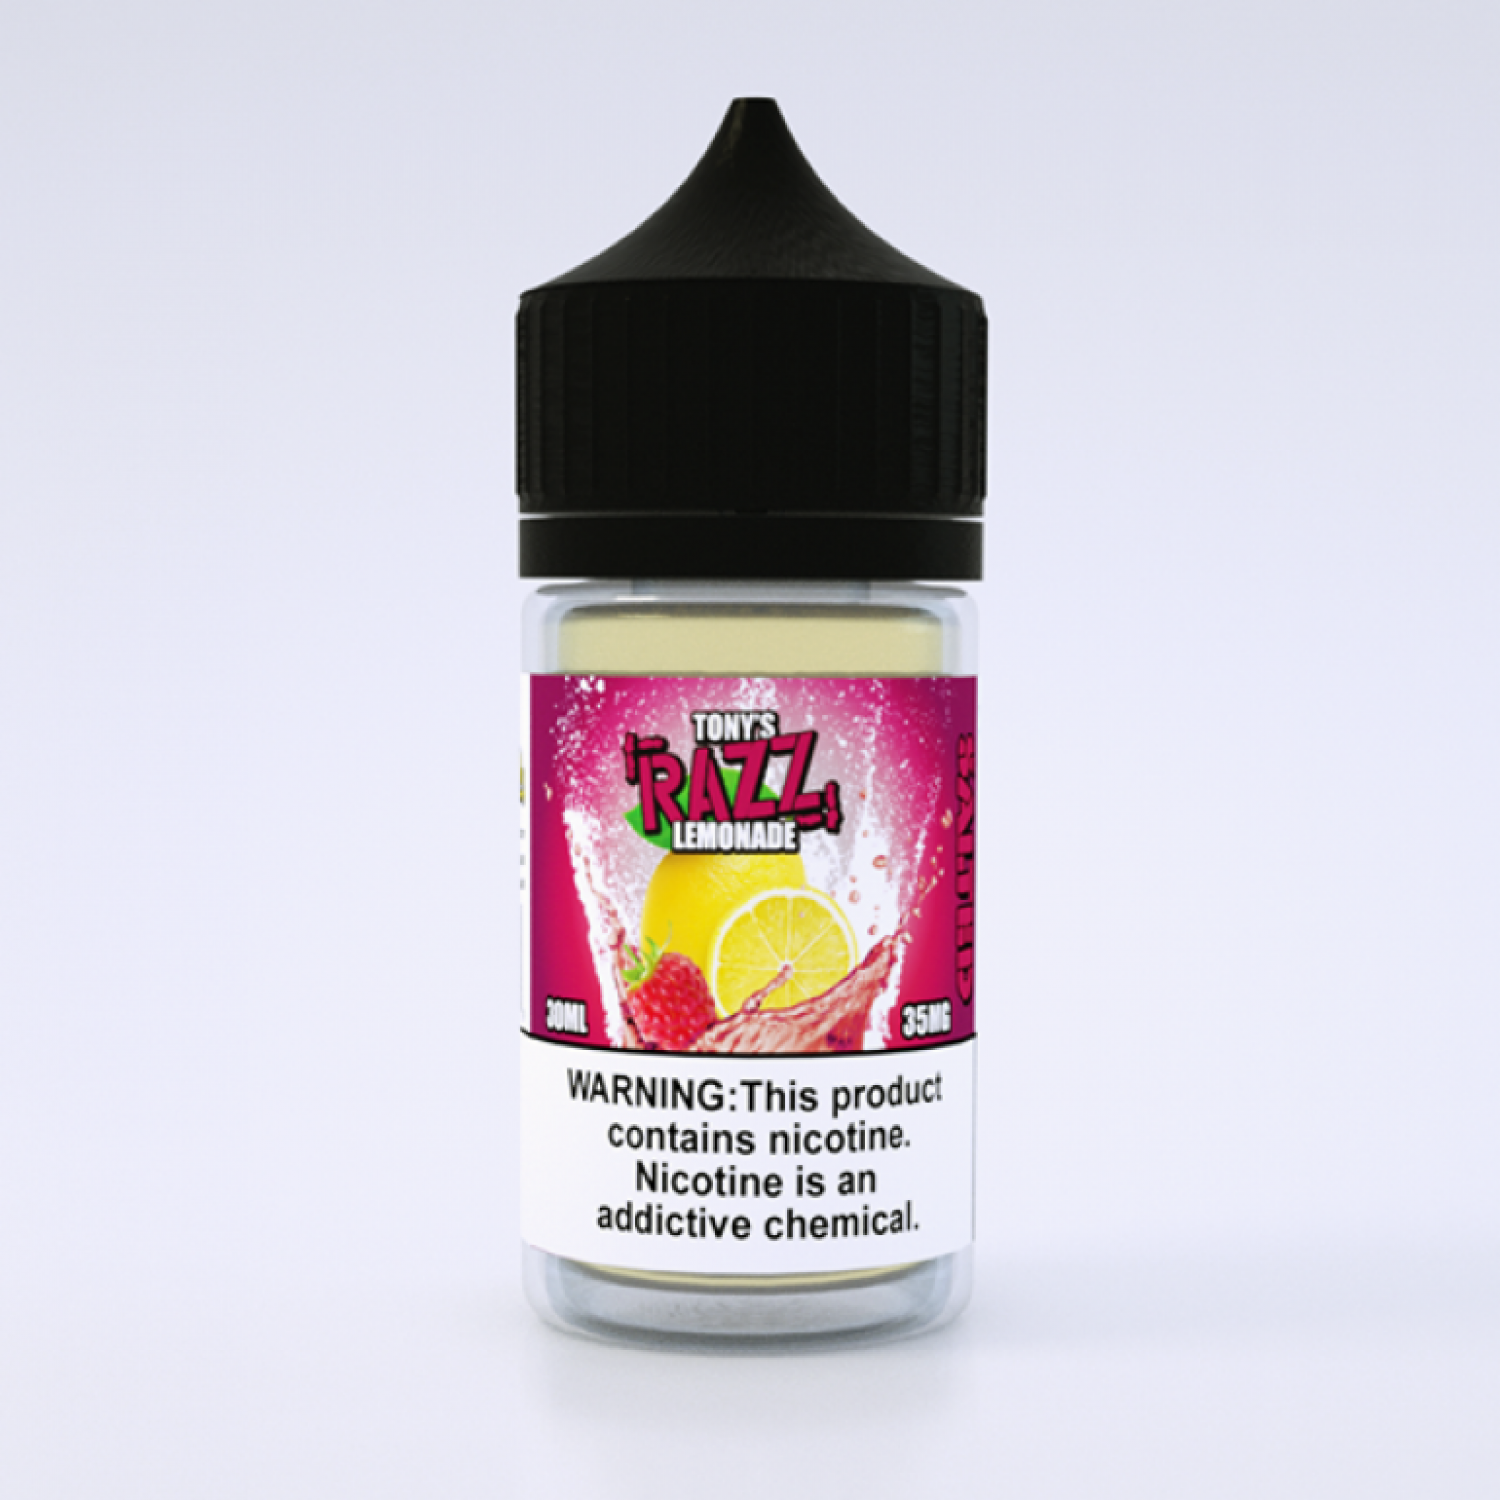 Tony’s - Razz Lemonade 30 ml Premium Salt Likit